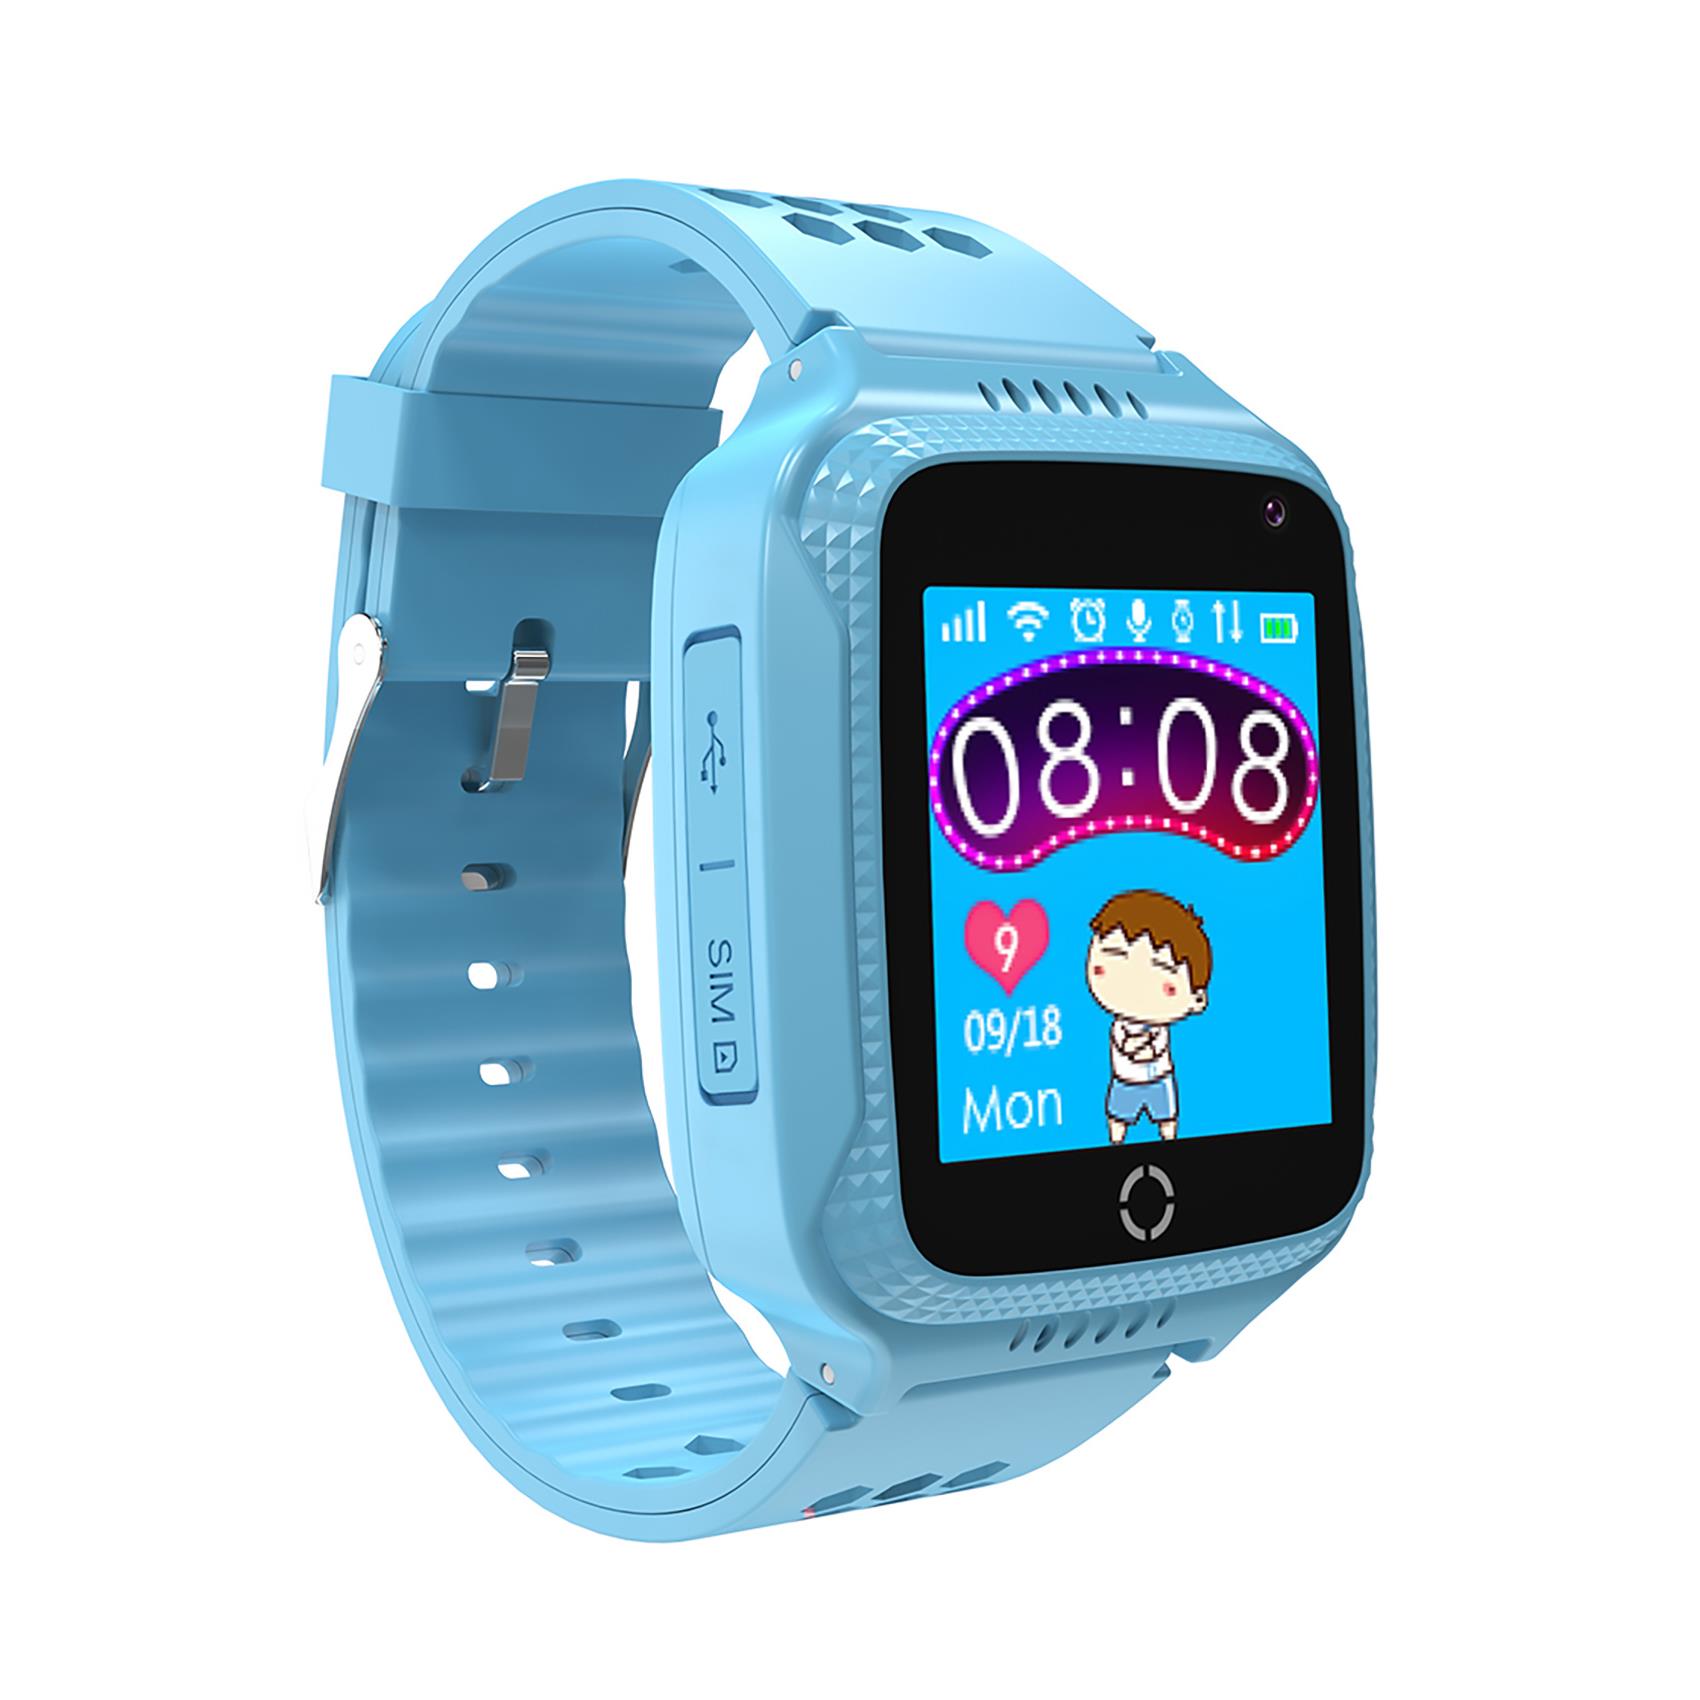 KIDSWATCH - Smartwatch for Kids [TECH for KIDS]